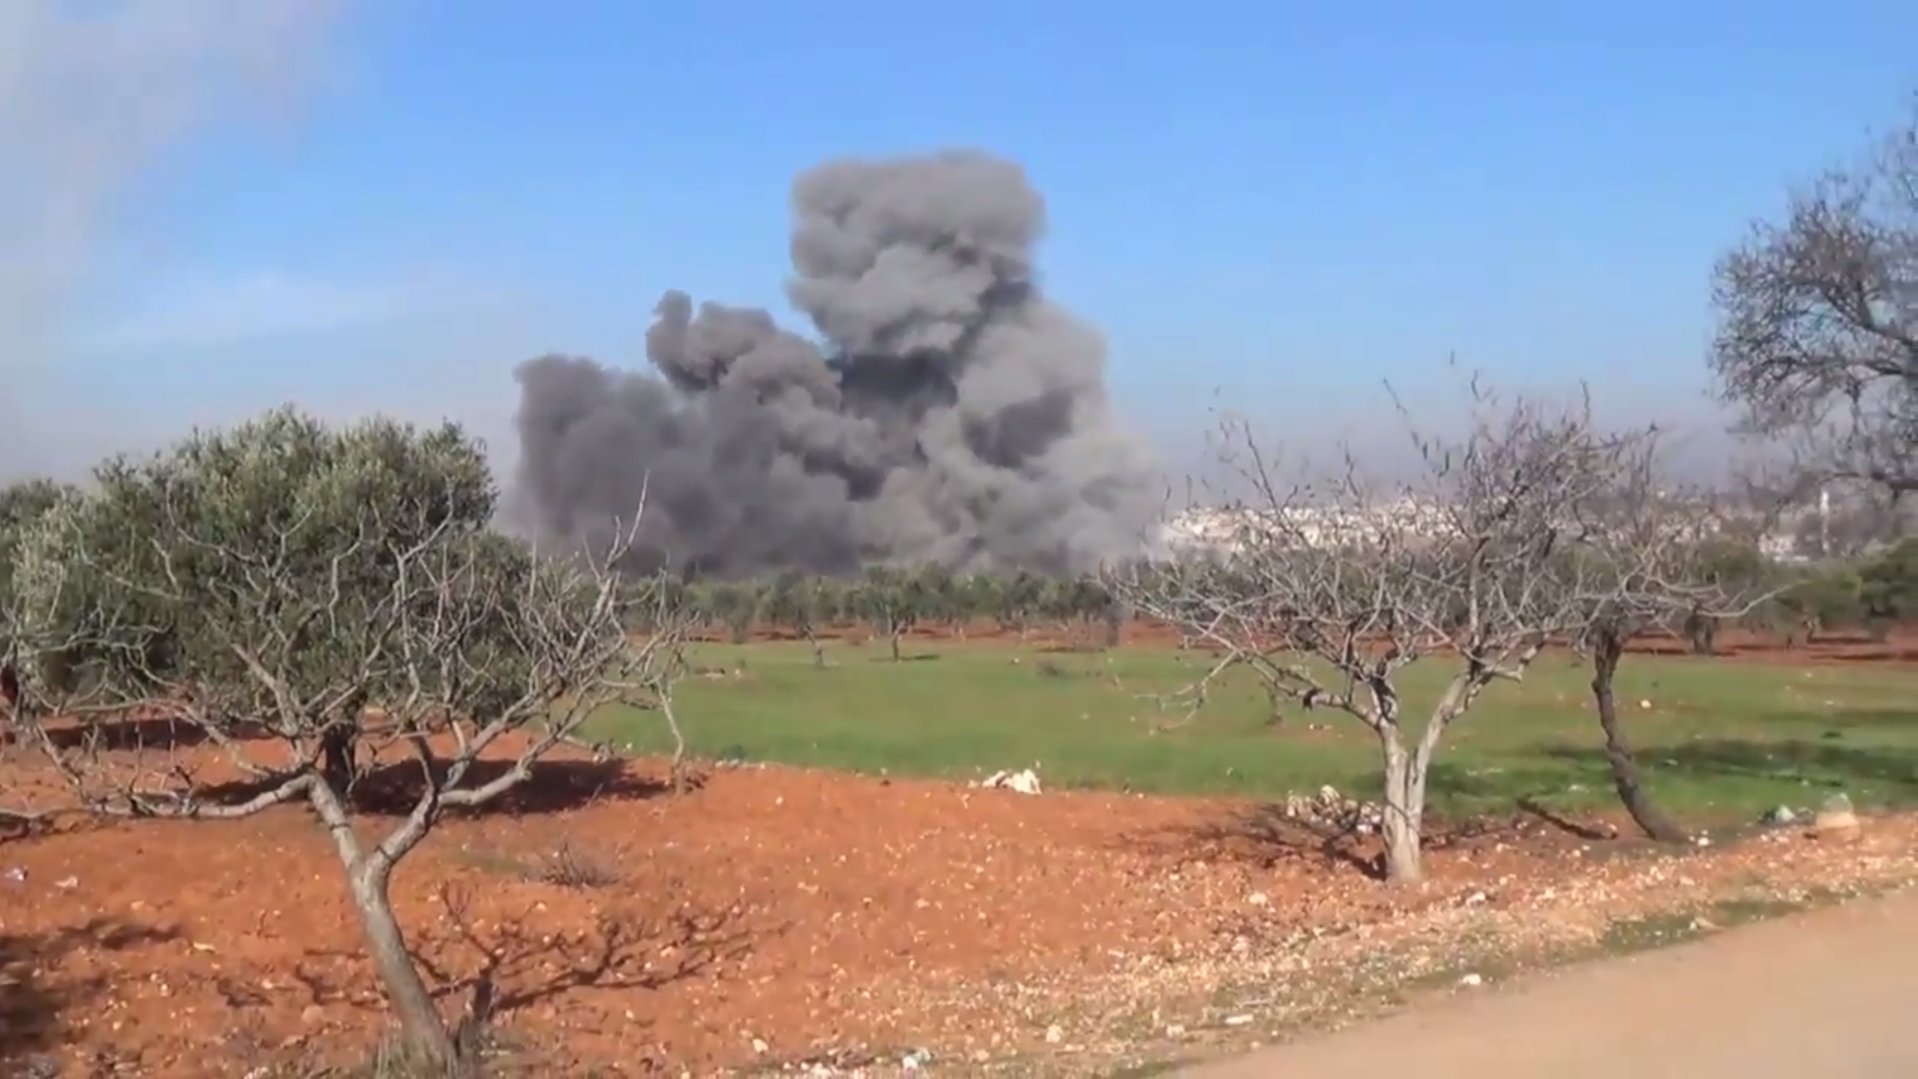 dbate.de_FLASH_Syrien_Krankenhaus_Bombenangriff_Video_2016